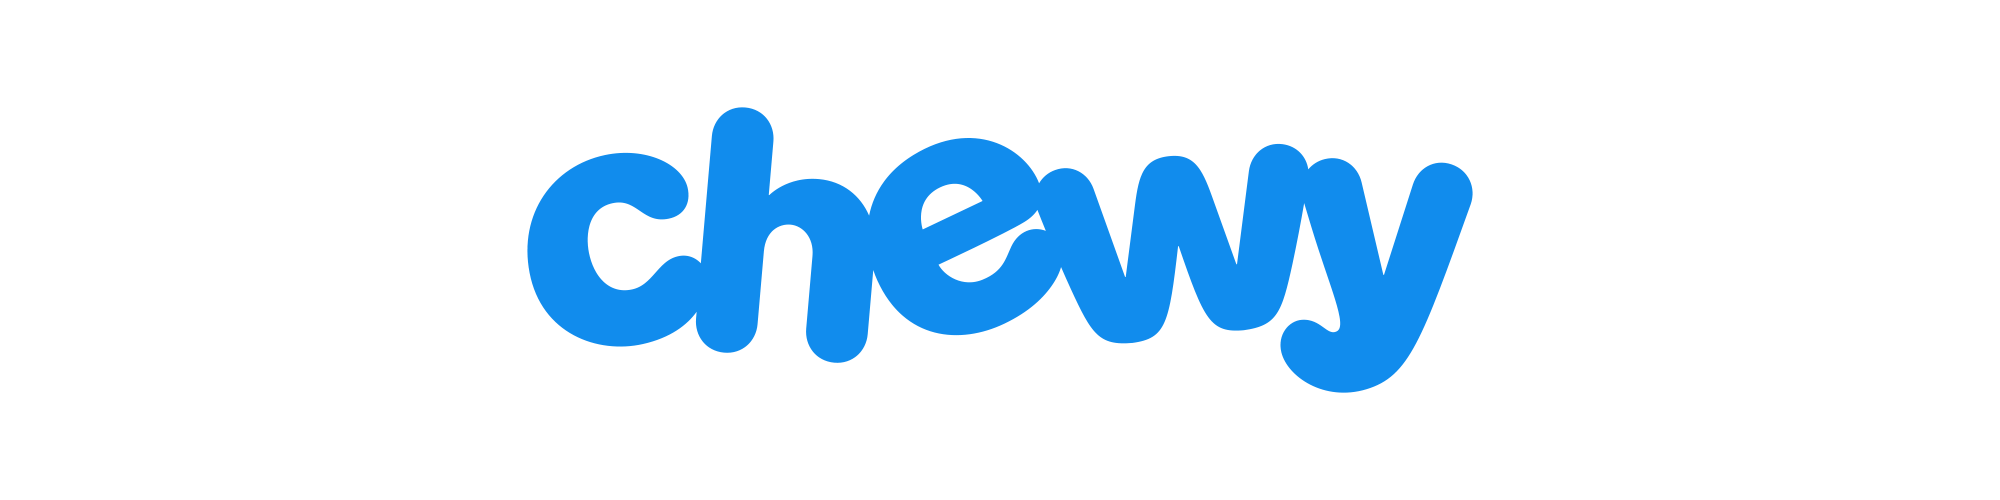 Chewy logo.